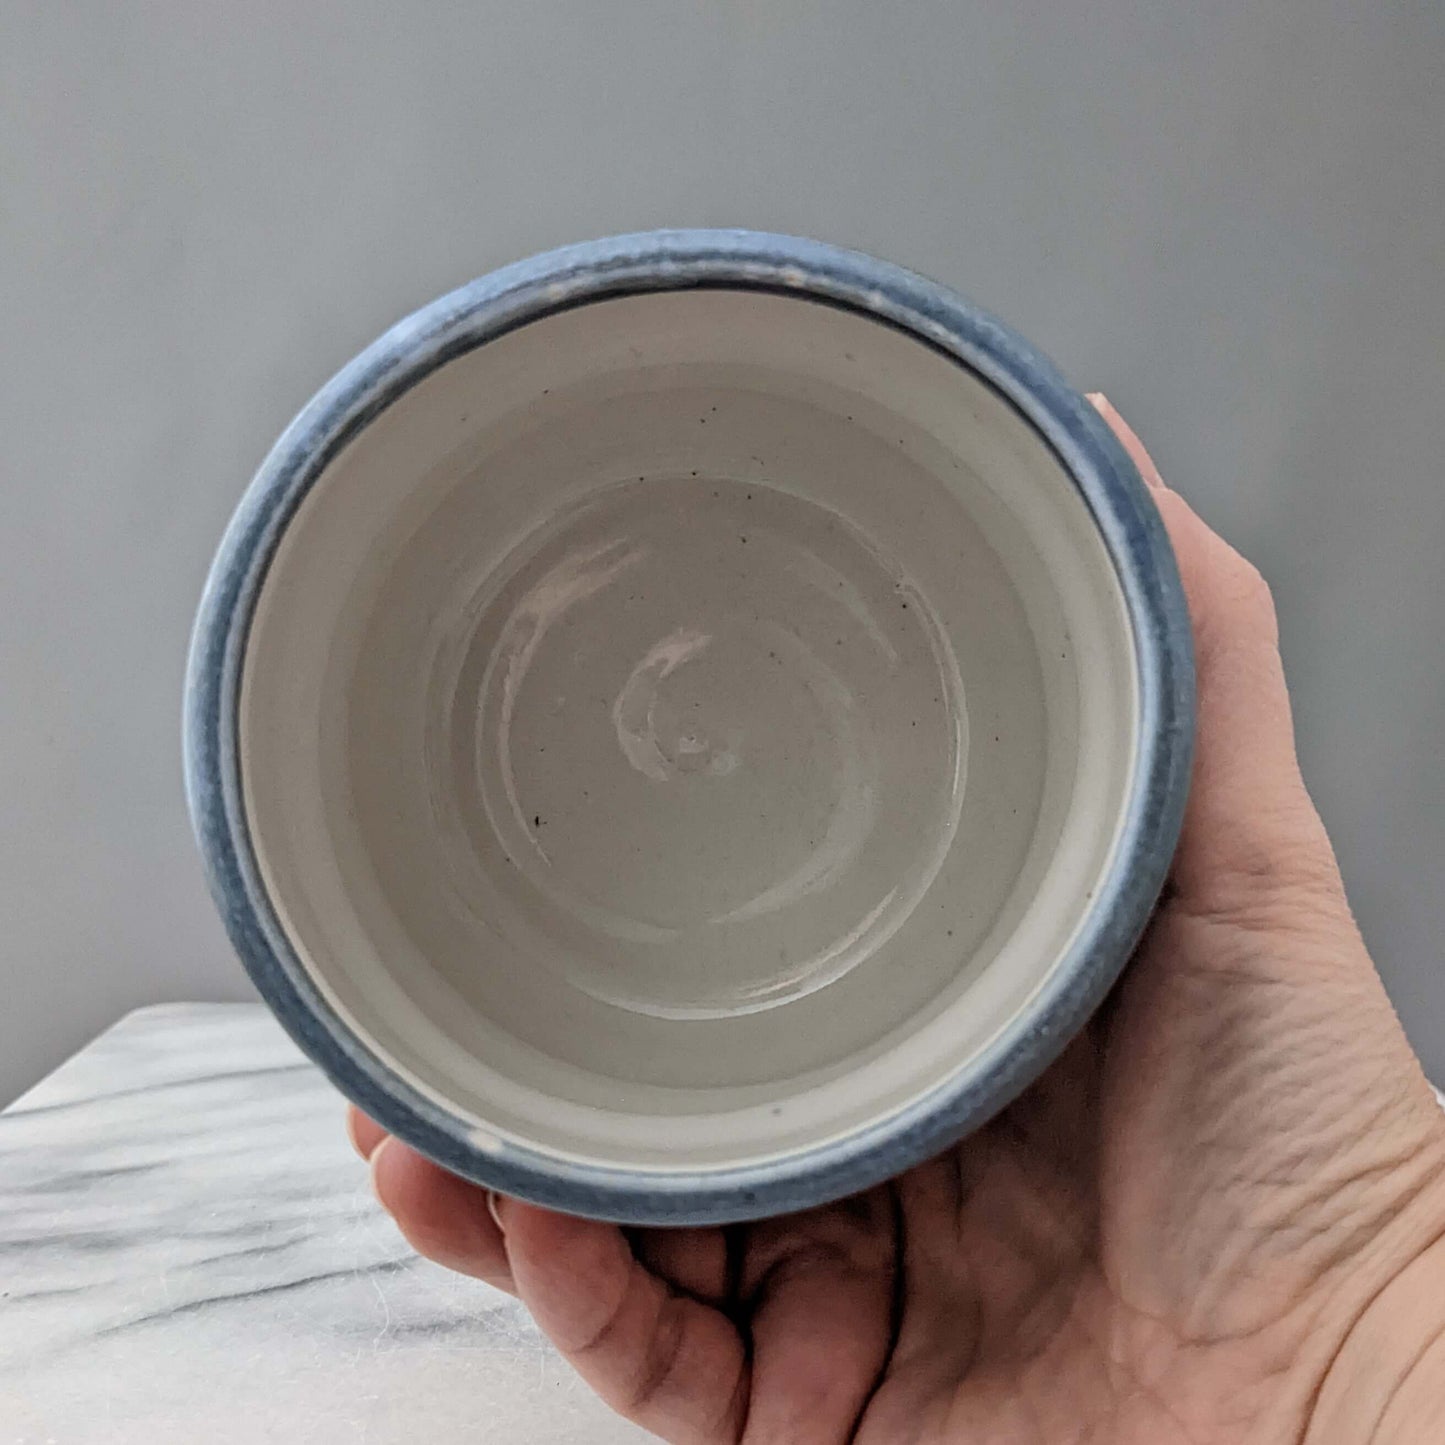 Moody Blue & White Small Ceramic Planter